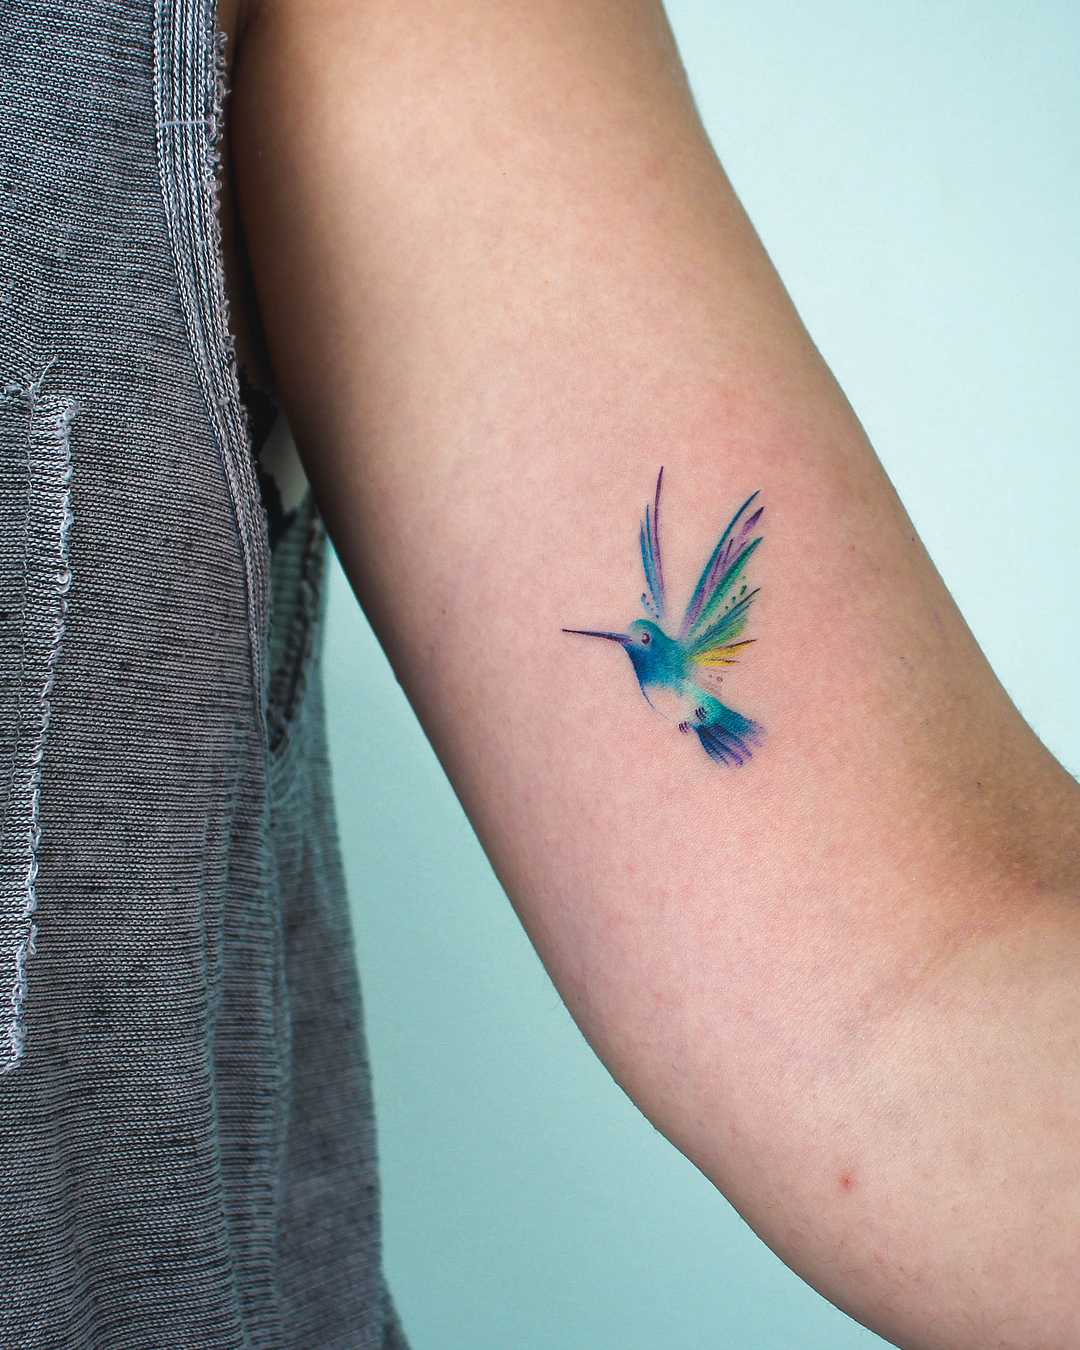 Inkzone - How about a colourful humming bird near your ankle 😁😁😁😁😉?  #inkmadd #hummingbird #colorful #ankletattoo #colortattoos #colorrealism  #customtattoo #tatt #tattooed #firsttattoo #noidatattooartist  #artistsoninstagram #artistofindia ...